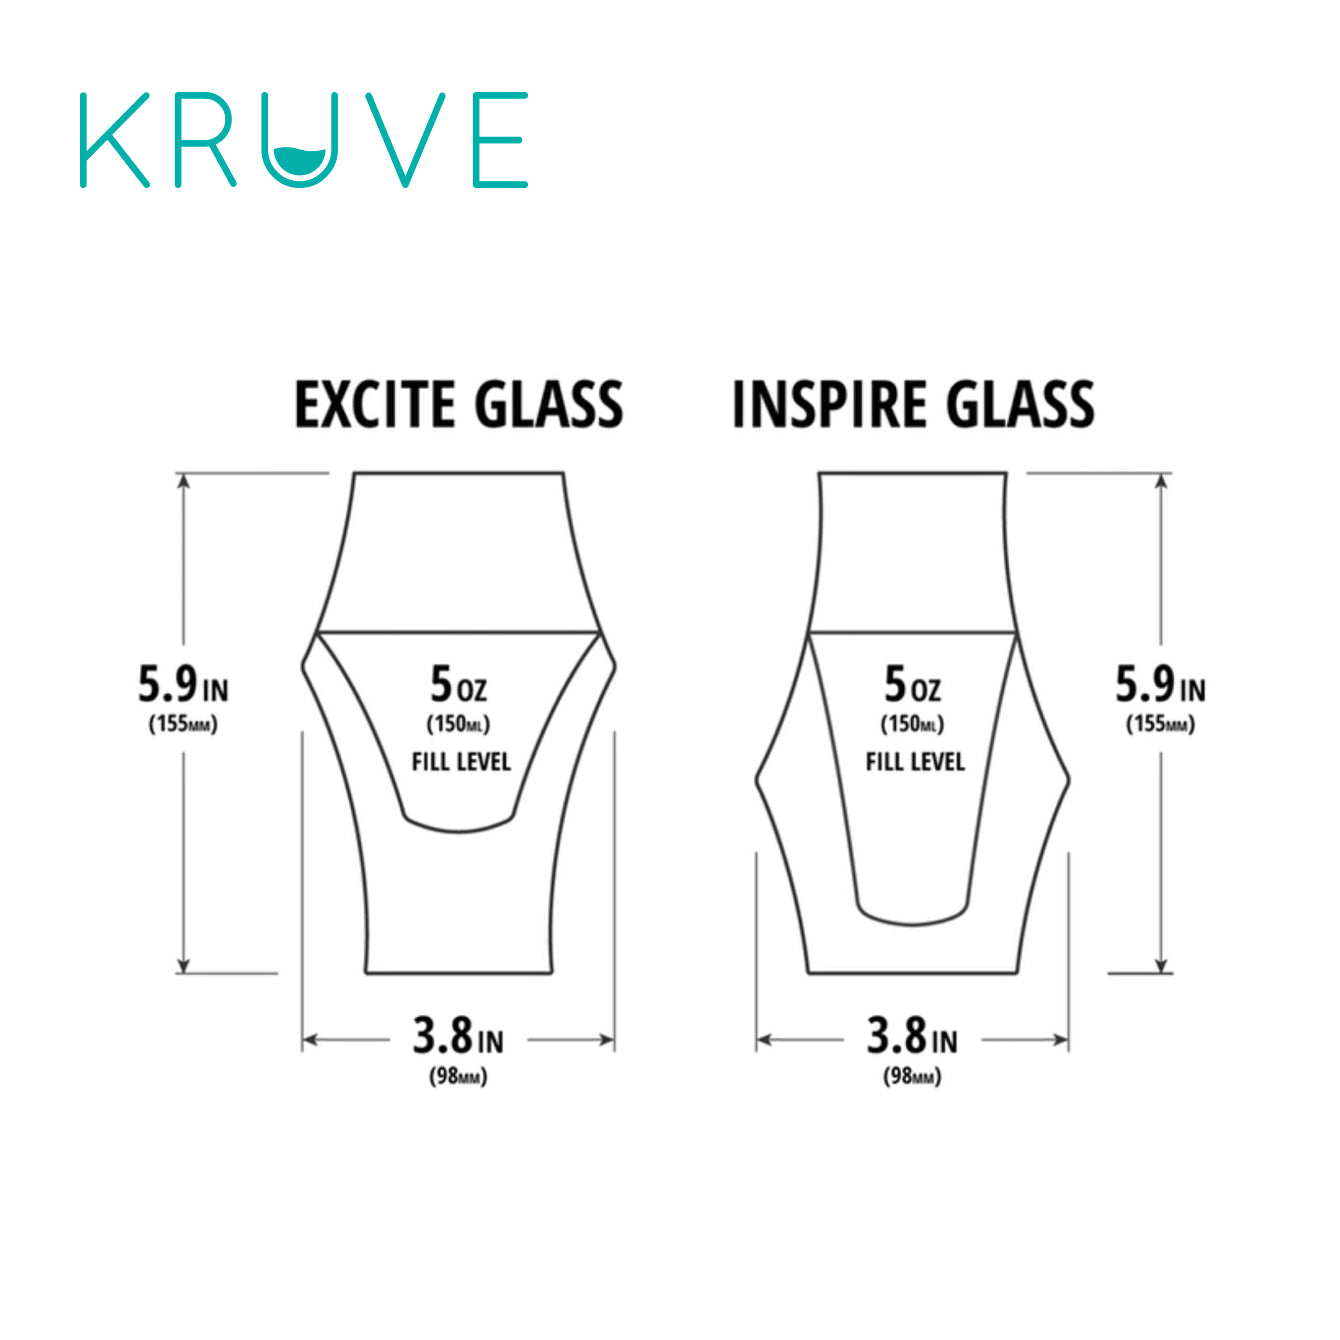 kruve excite inspire glass specs